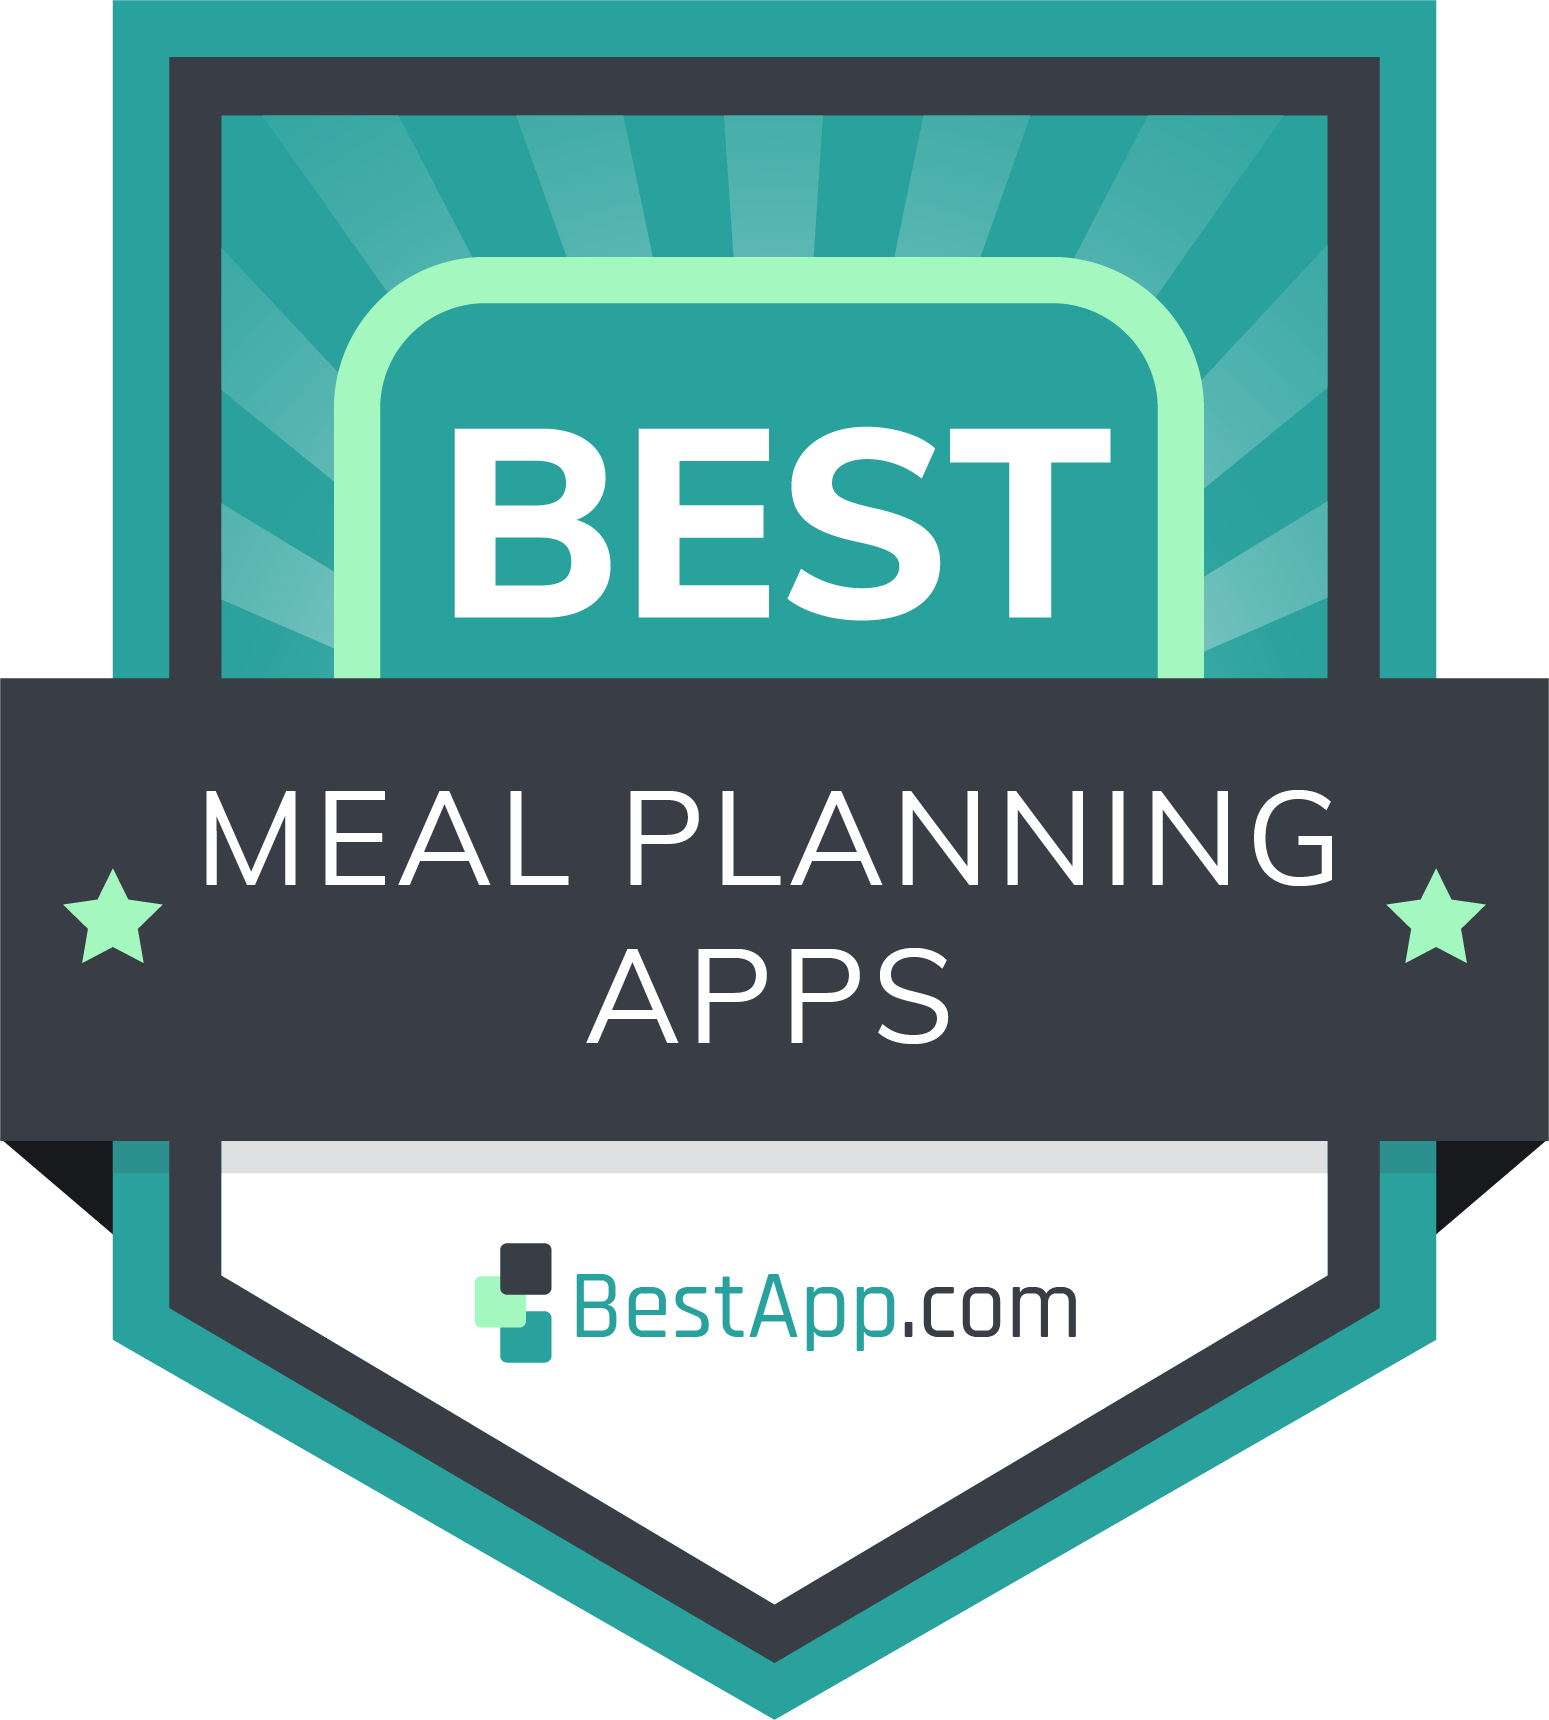 Best Meal Planning Apps Badge